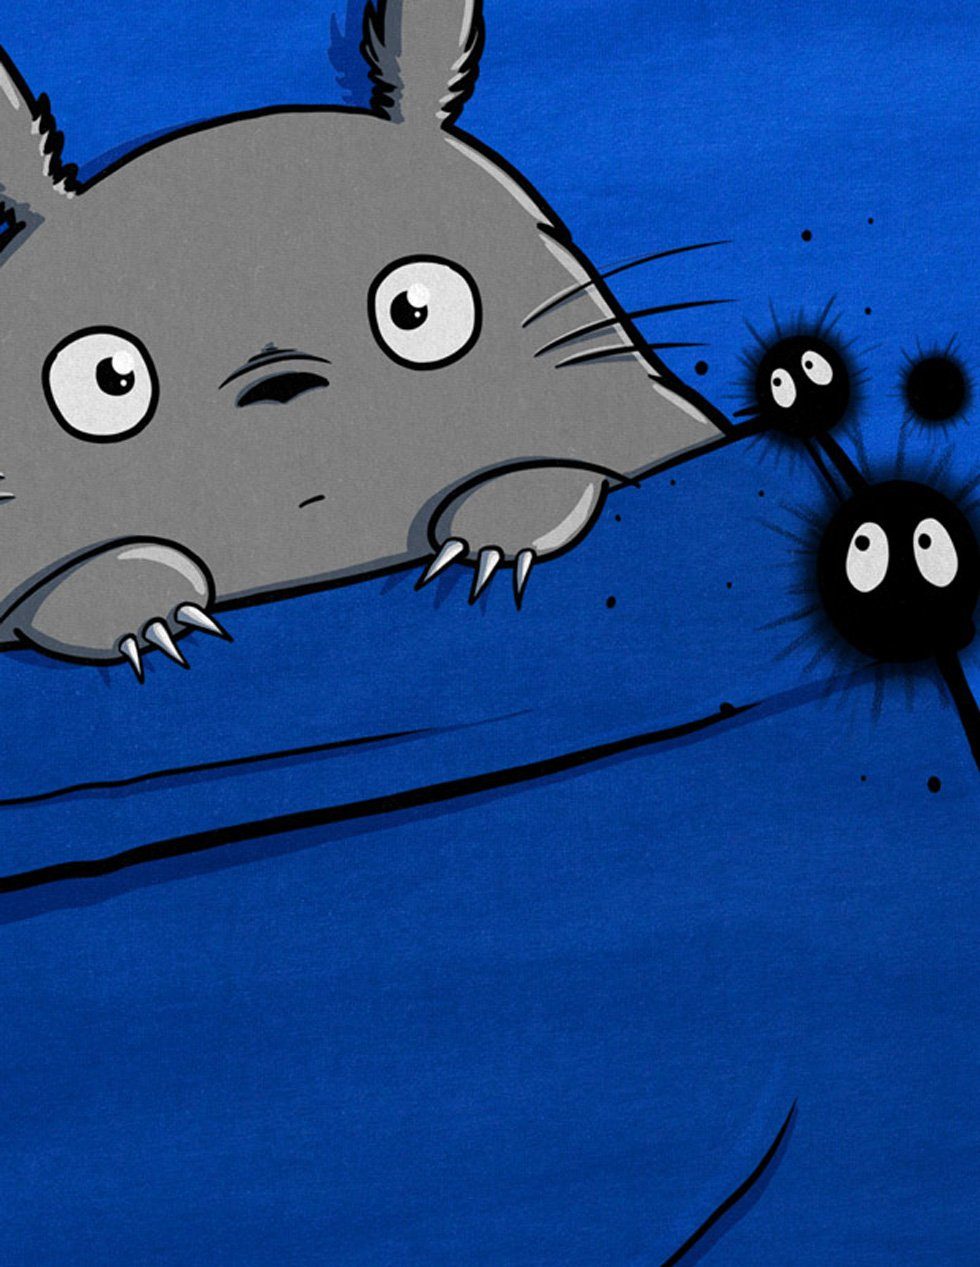 nachbar no Totoro Kinder mein Brusttasche Print-Shirt blau style3 neko tonari T-Shirt anime